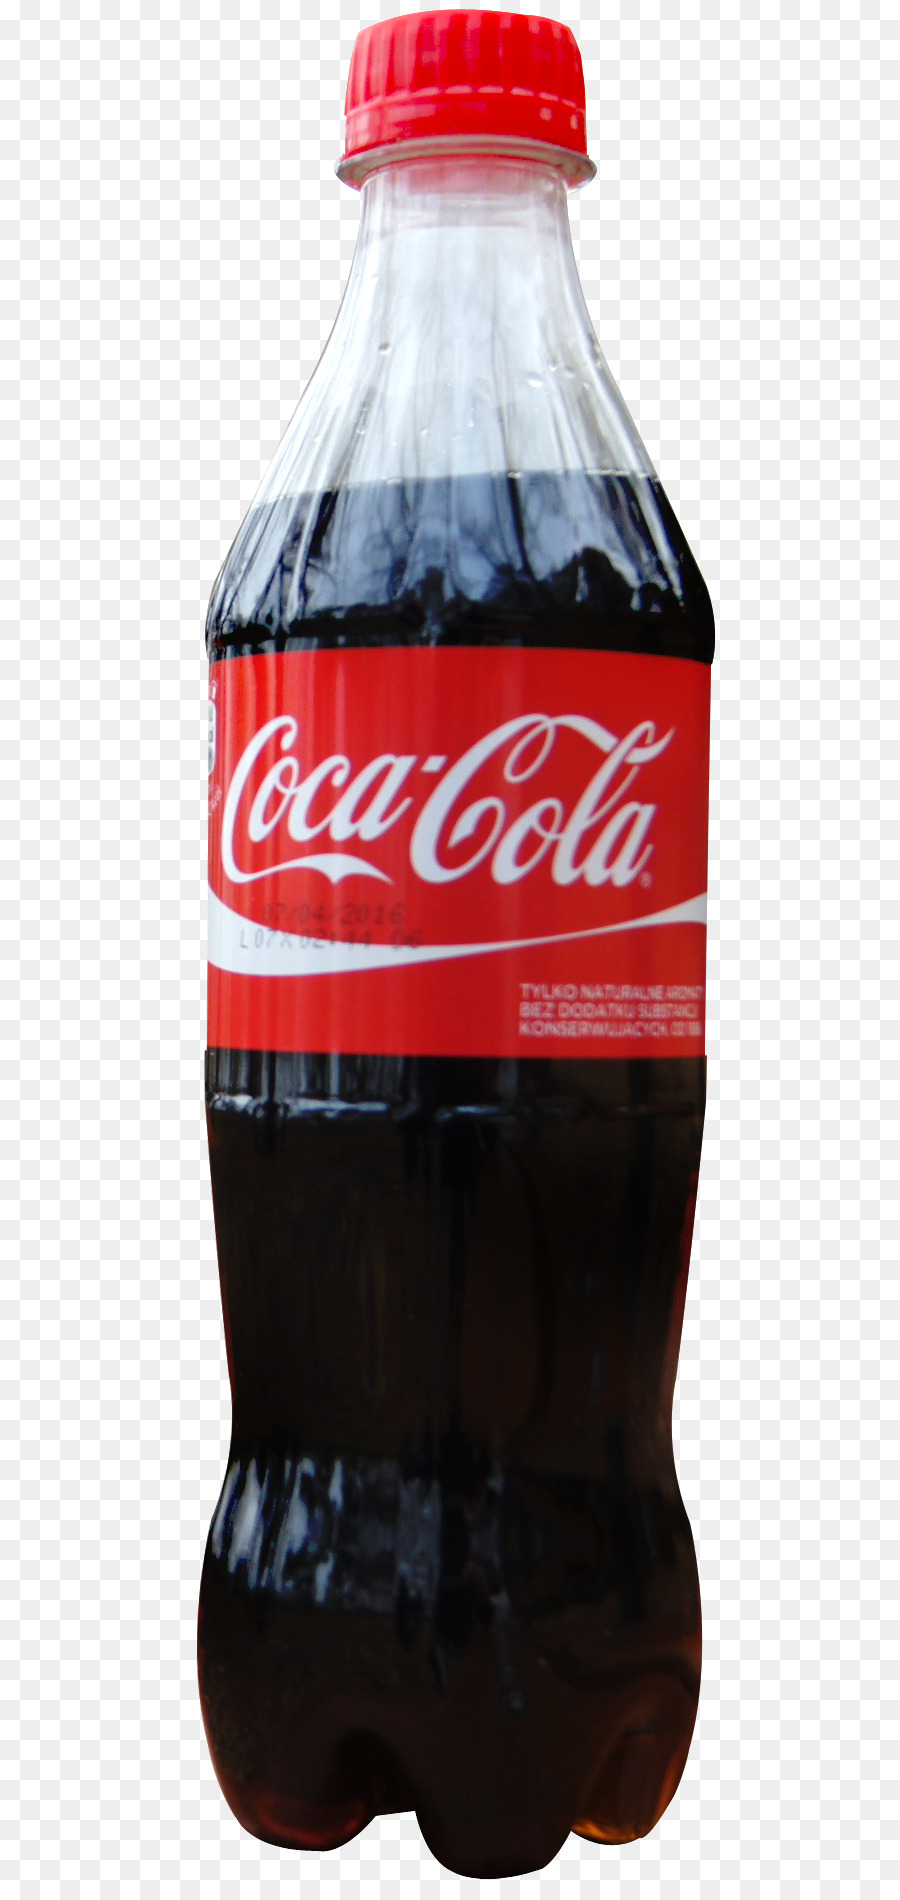 Coca-Cola Soft drink Diet Coke Bottle - Coca Cola PNG HD png download - 550*1888 - Free Transparent Coca Cola png Download.